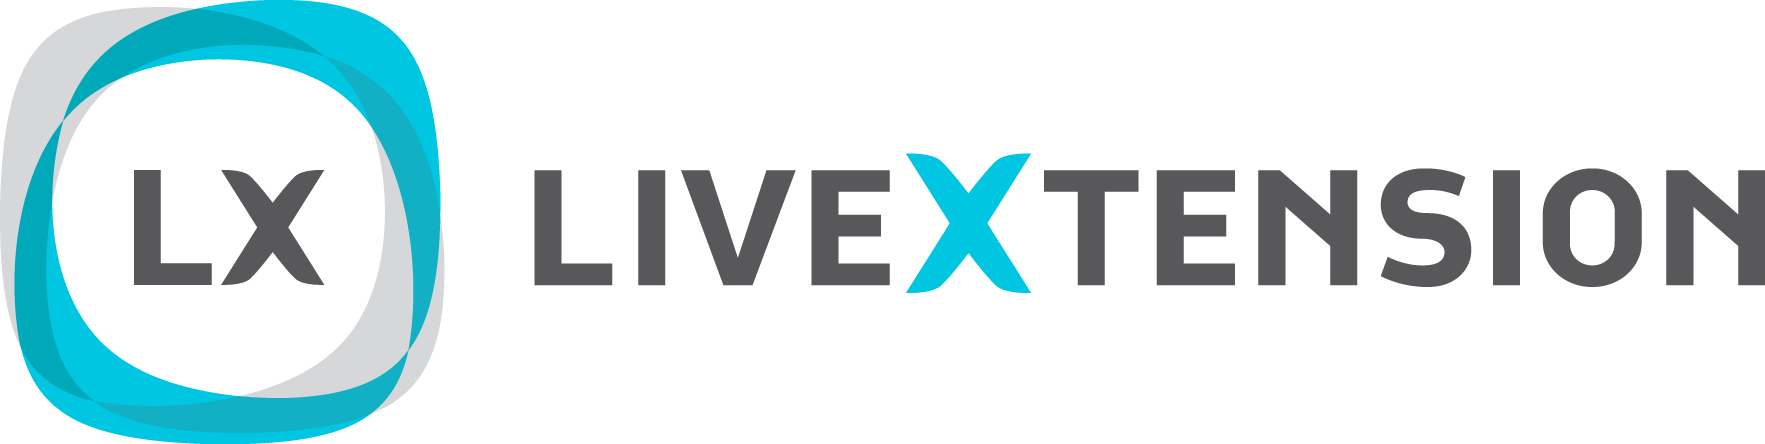 Logotipo LiveXtension